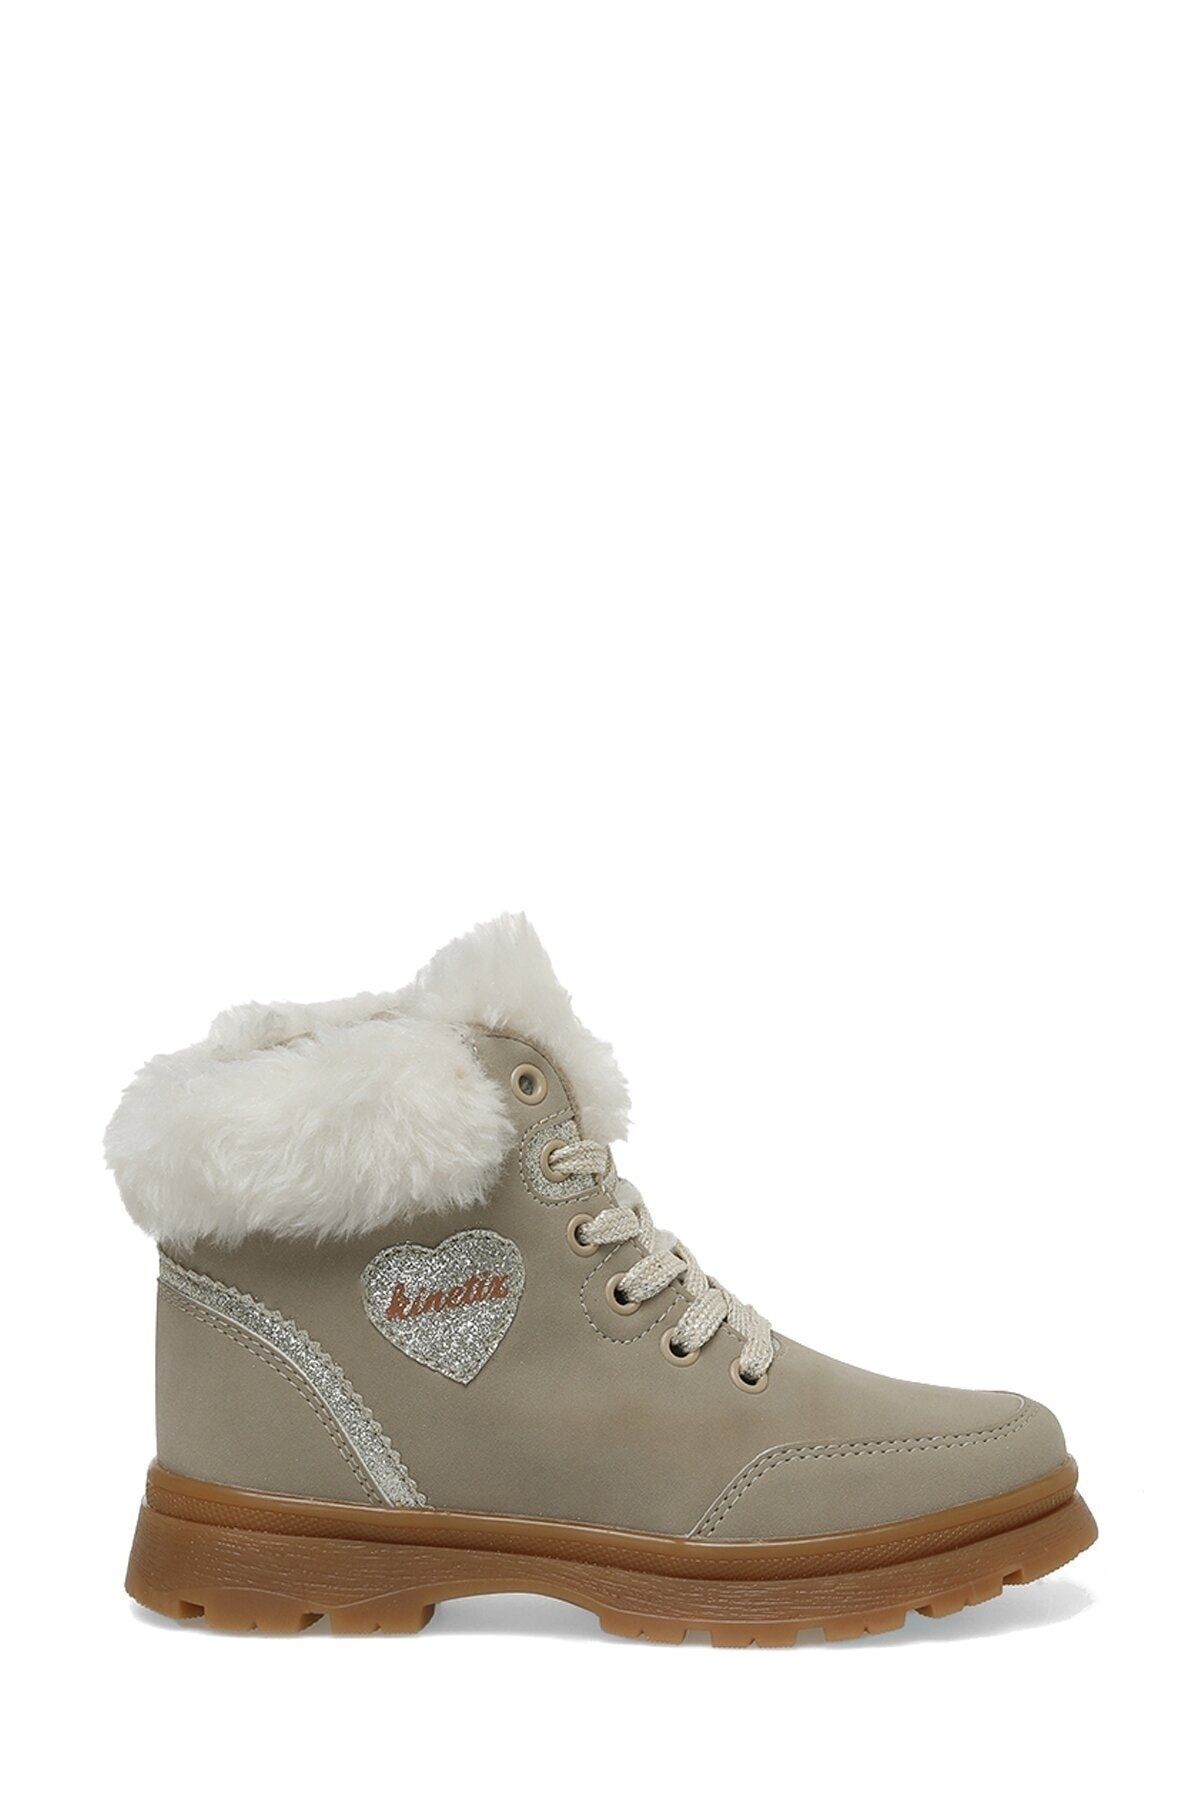 Akiihool Booties Baby Girls Cowboy Tassel Boots Elliot Leather Sneaker Boots  (Pink,11) - Walmart.com